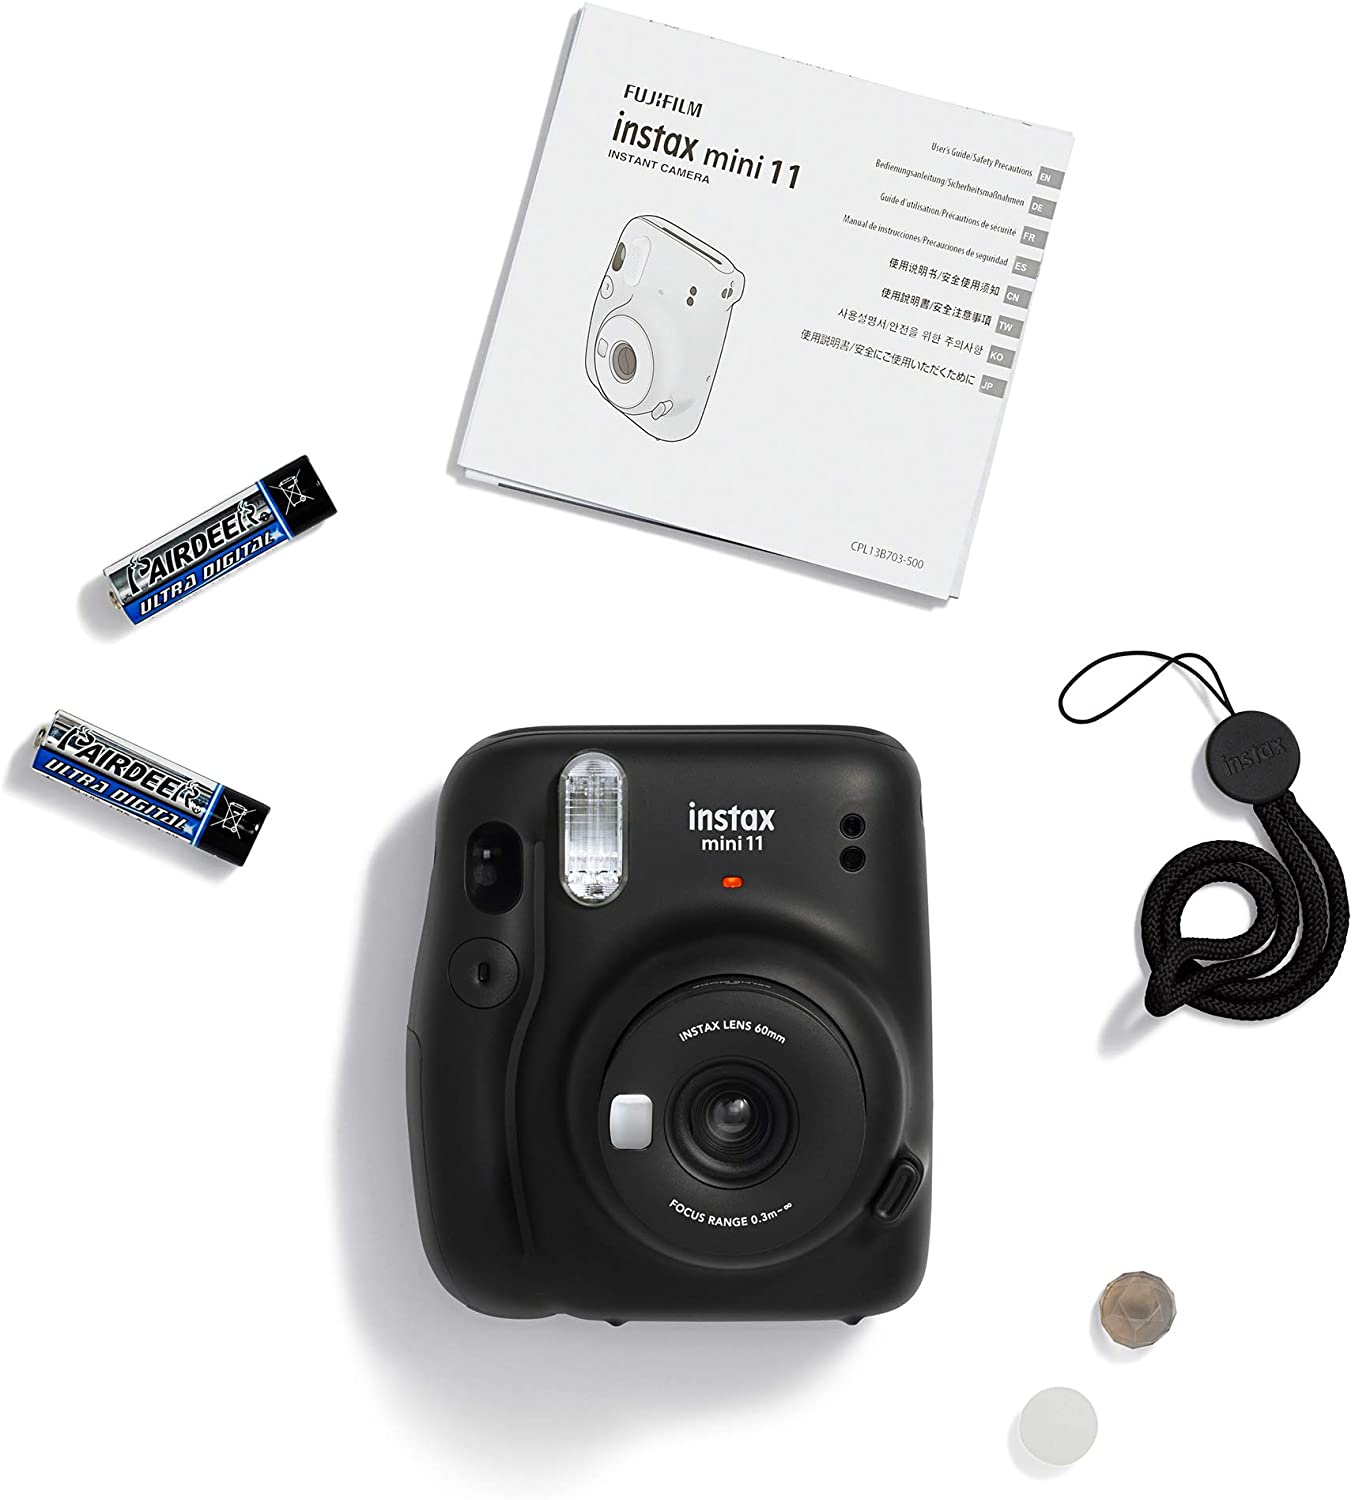 Comprar Fujifilm Instax Mini 11 Instant Camera Charcoal Gray +